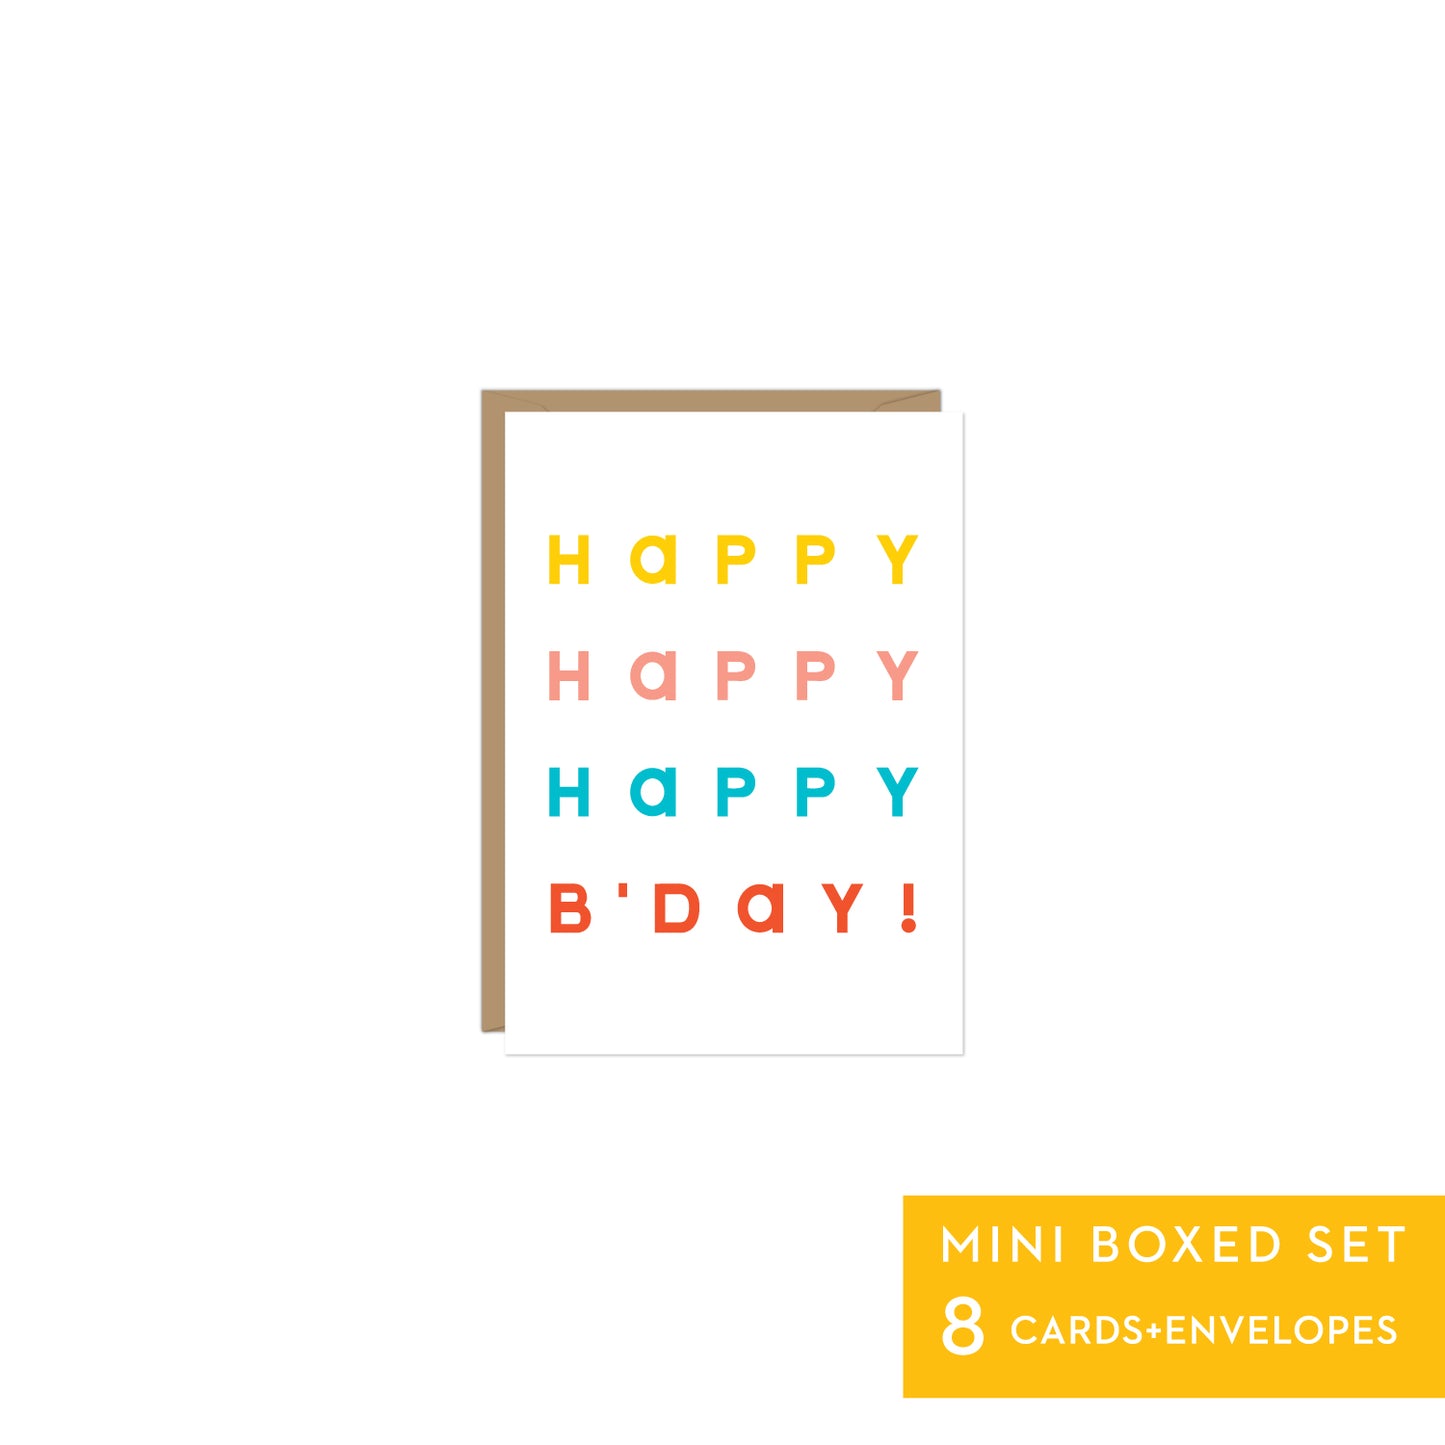 HAPPY HAPPY BIRTHDAY-Mini Boxed Set of 8 cards